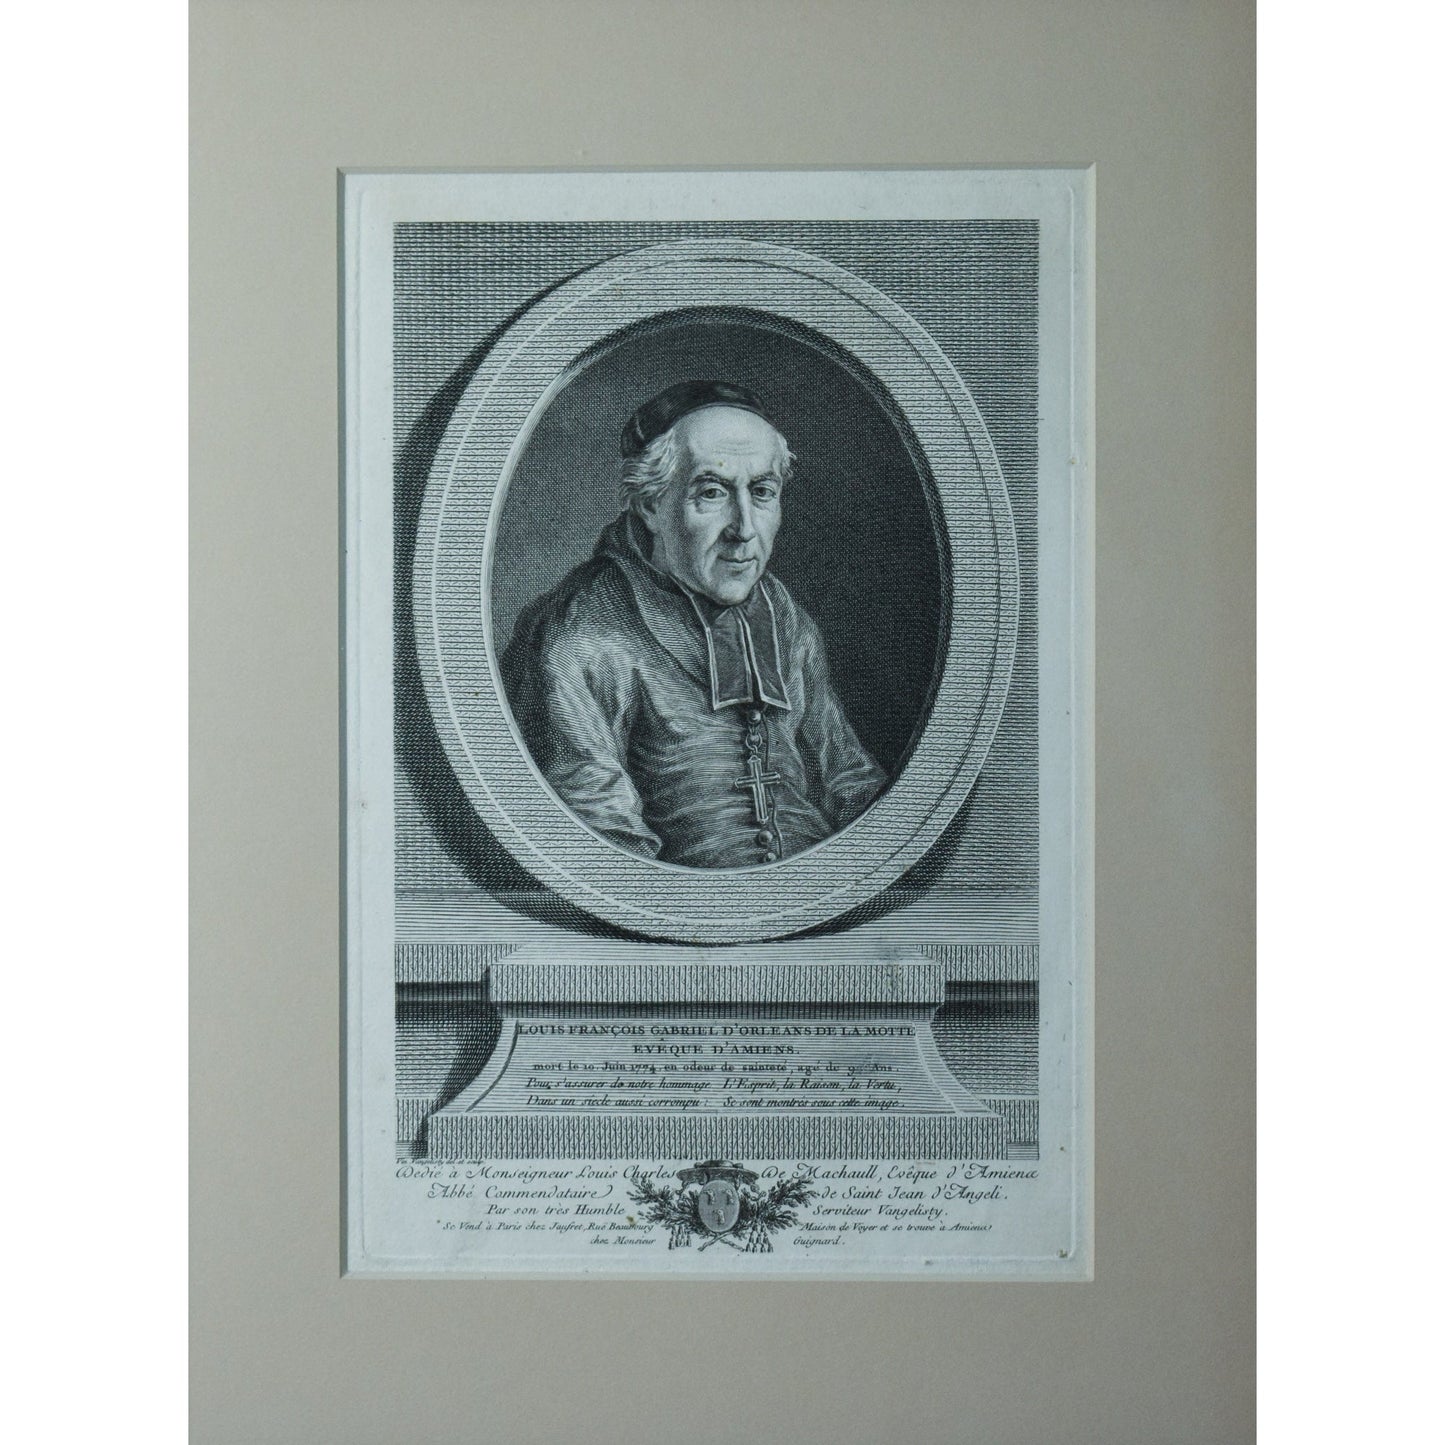 Vincenzio Vangelisti (c. 1740-1798)